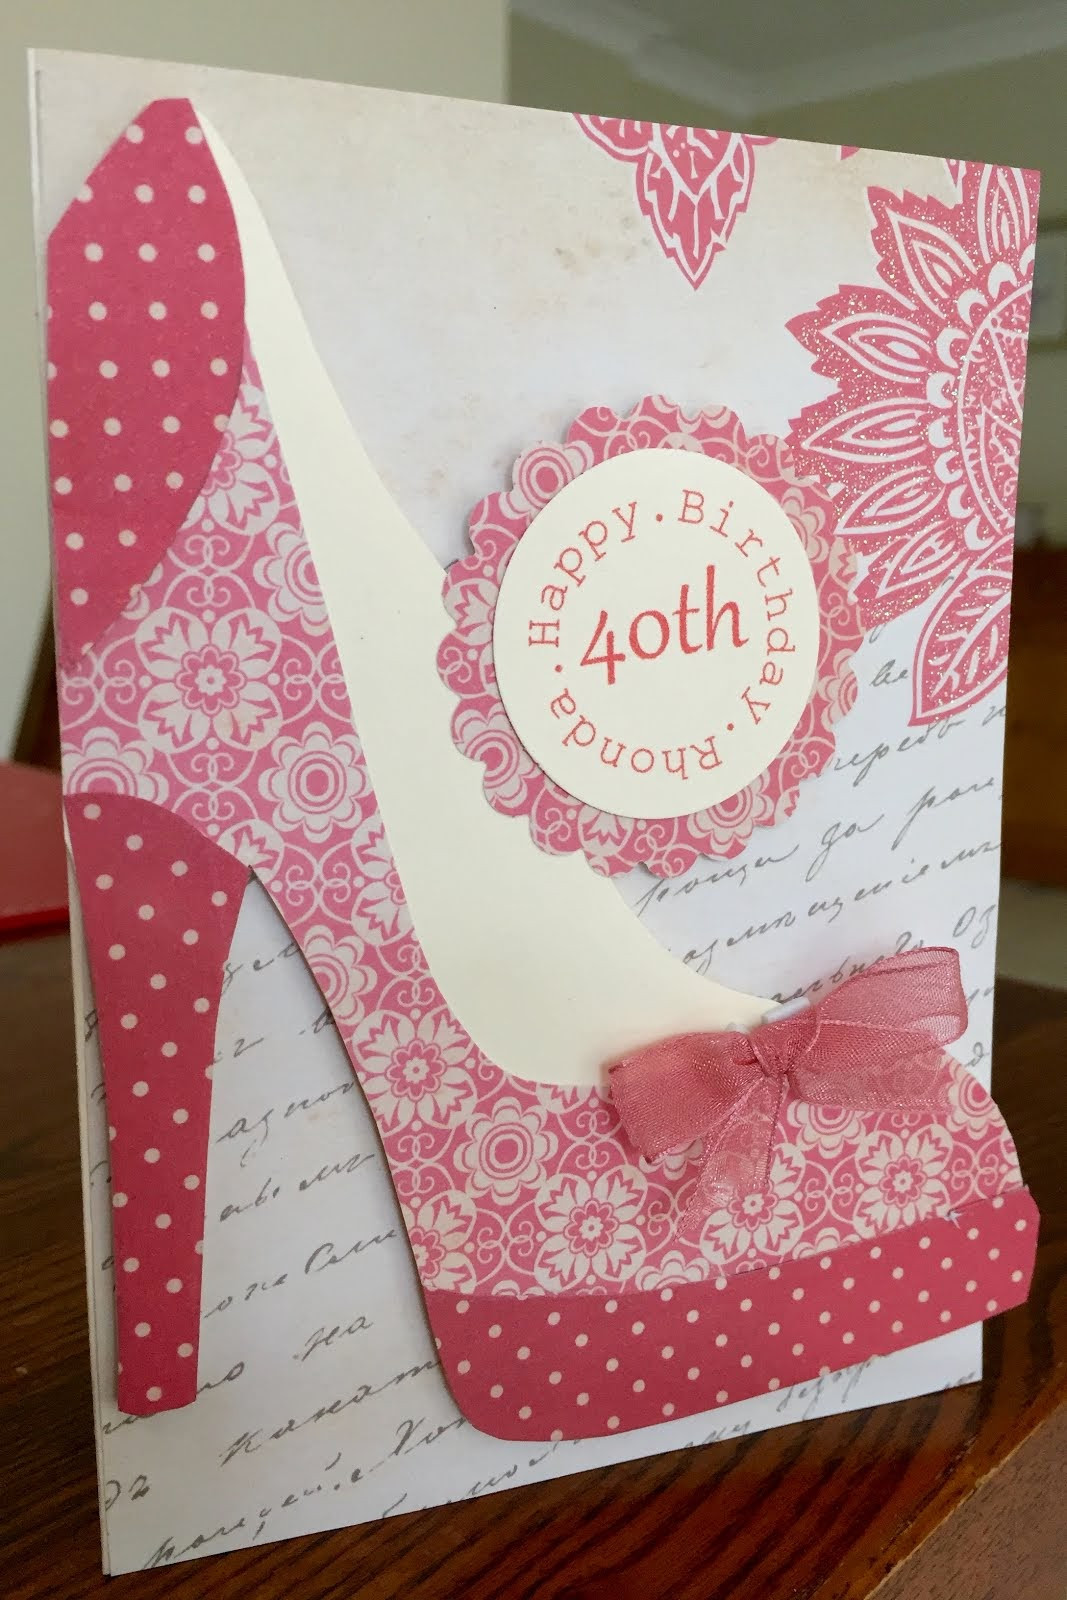 40th Birthday Gift Ideas For Sister
 The Baynhams